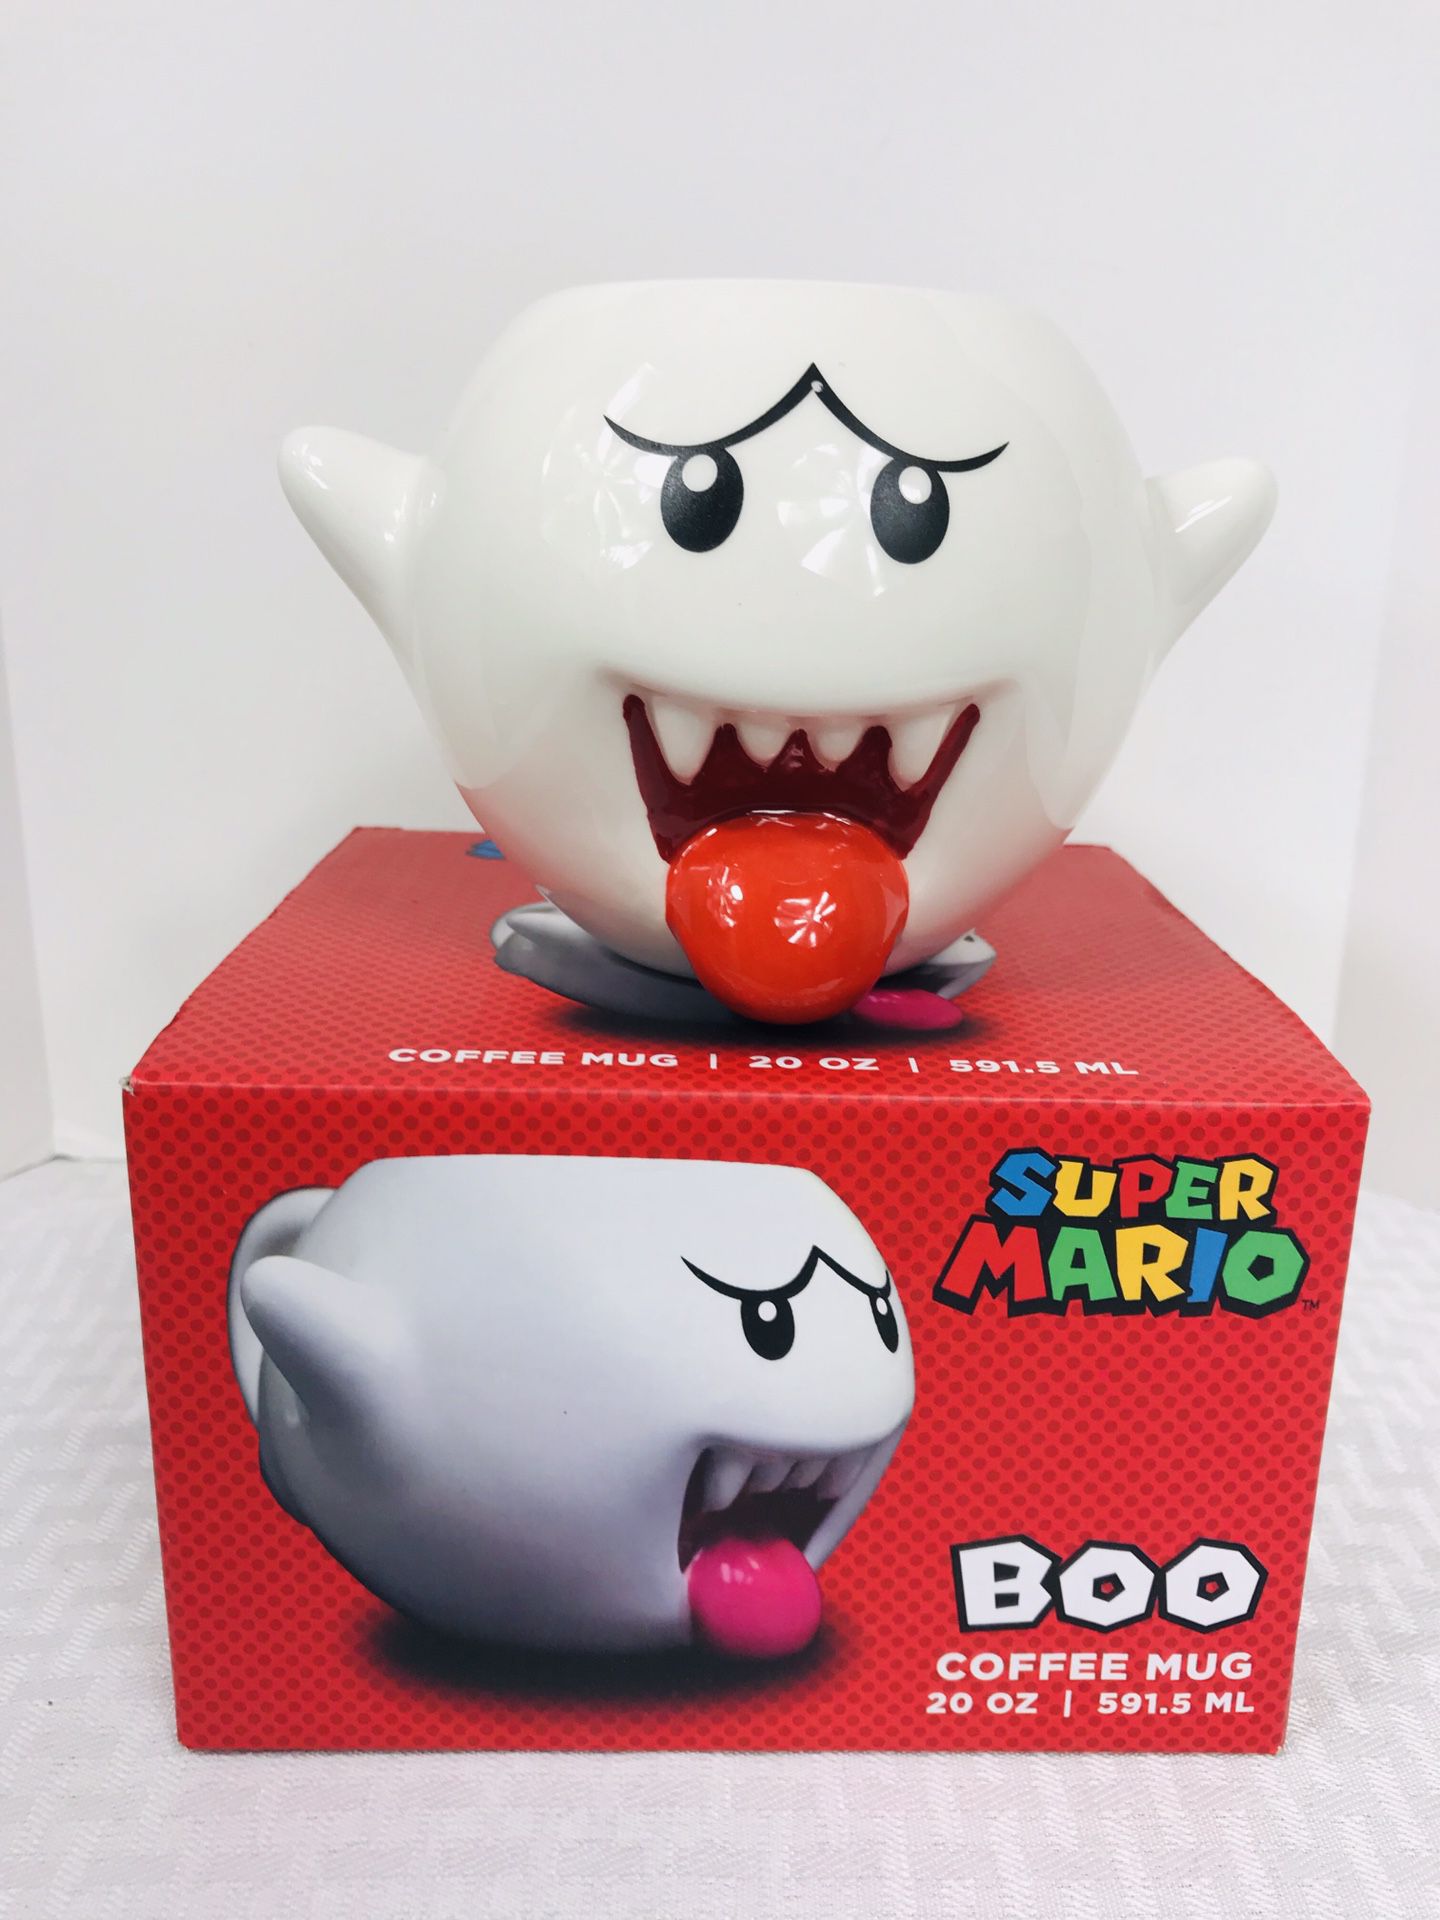 Brand new Super Mario BOO coffee mug